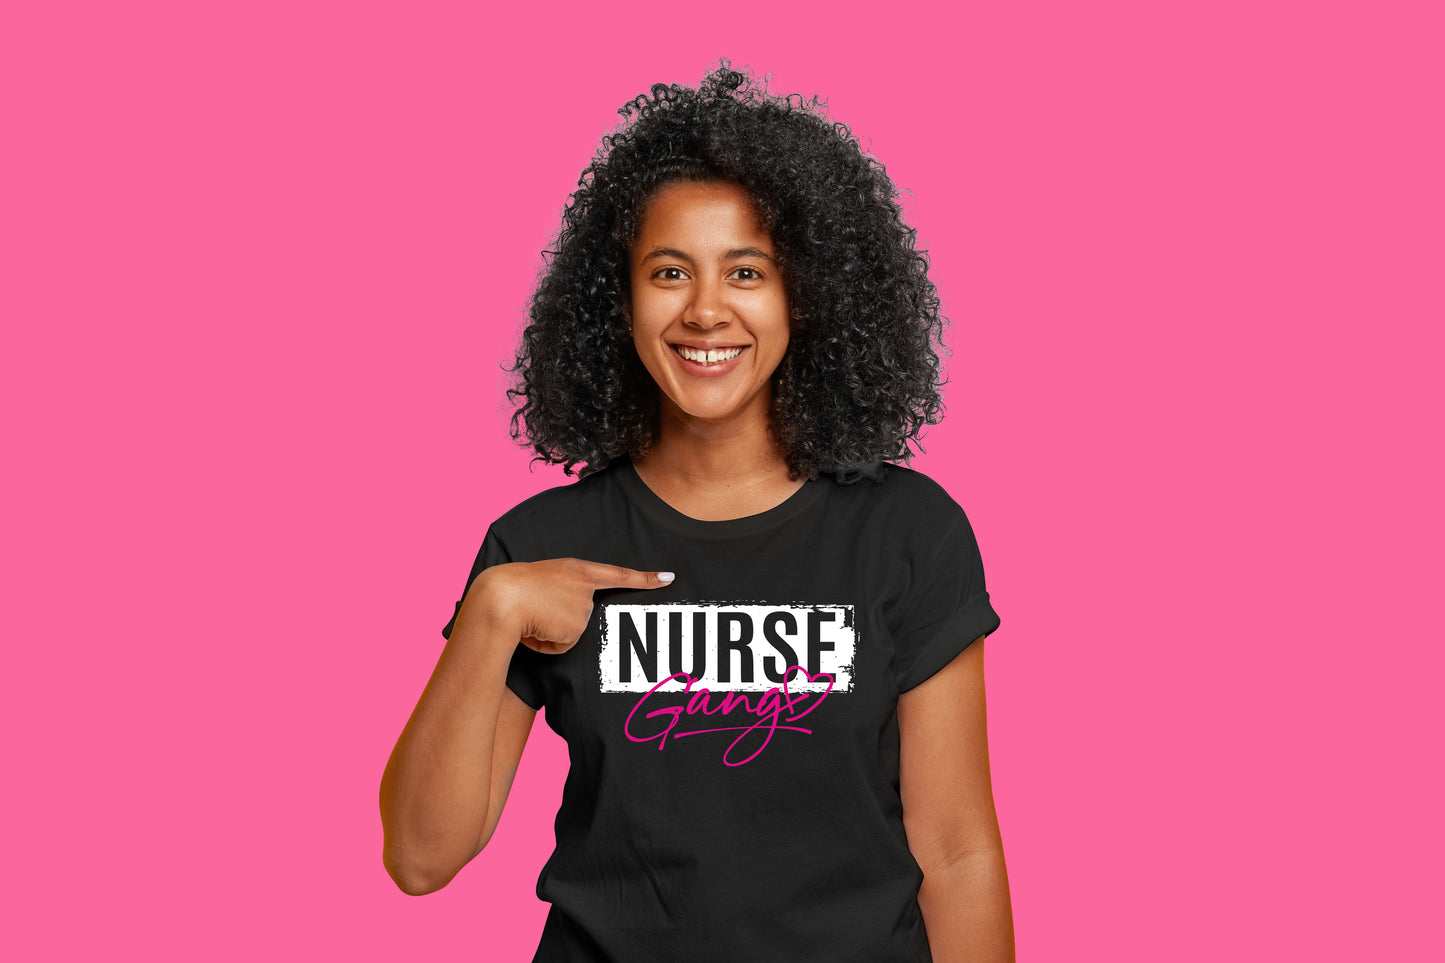 Nurses in the News - Nurse Gang Tee